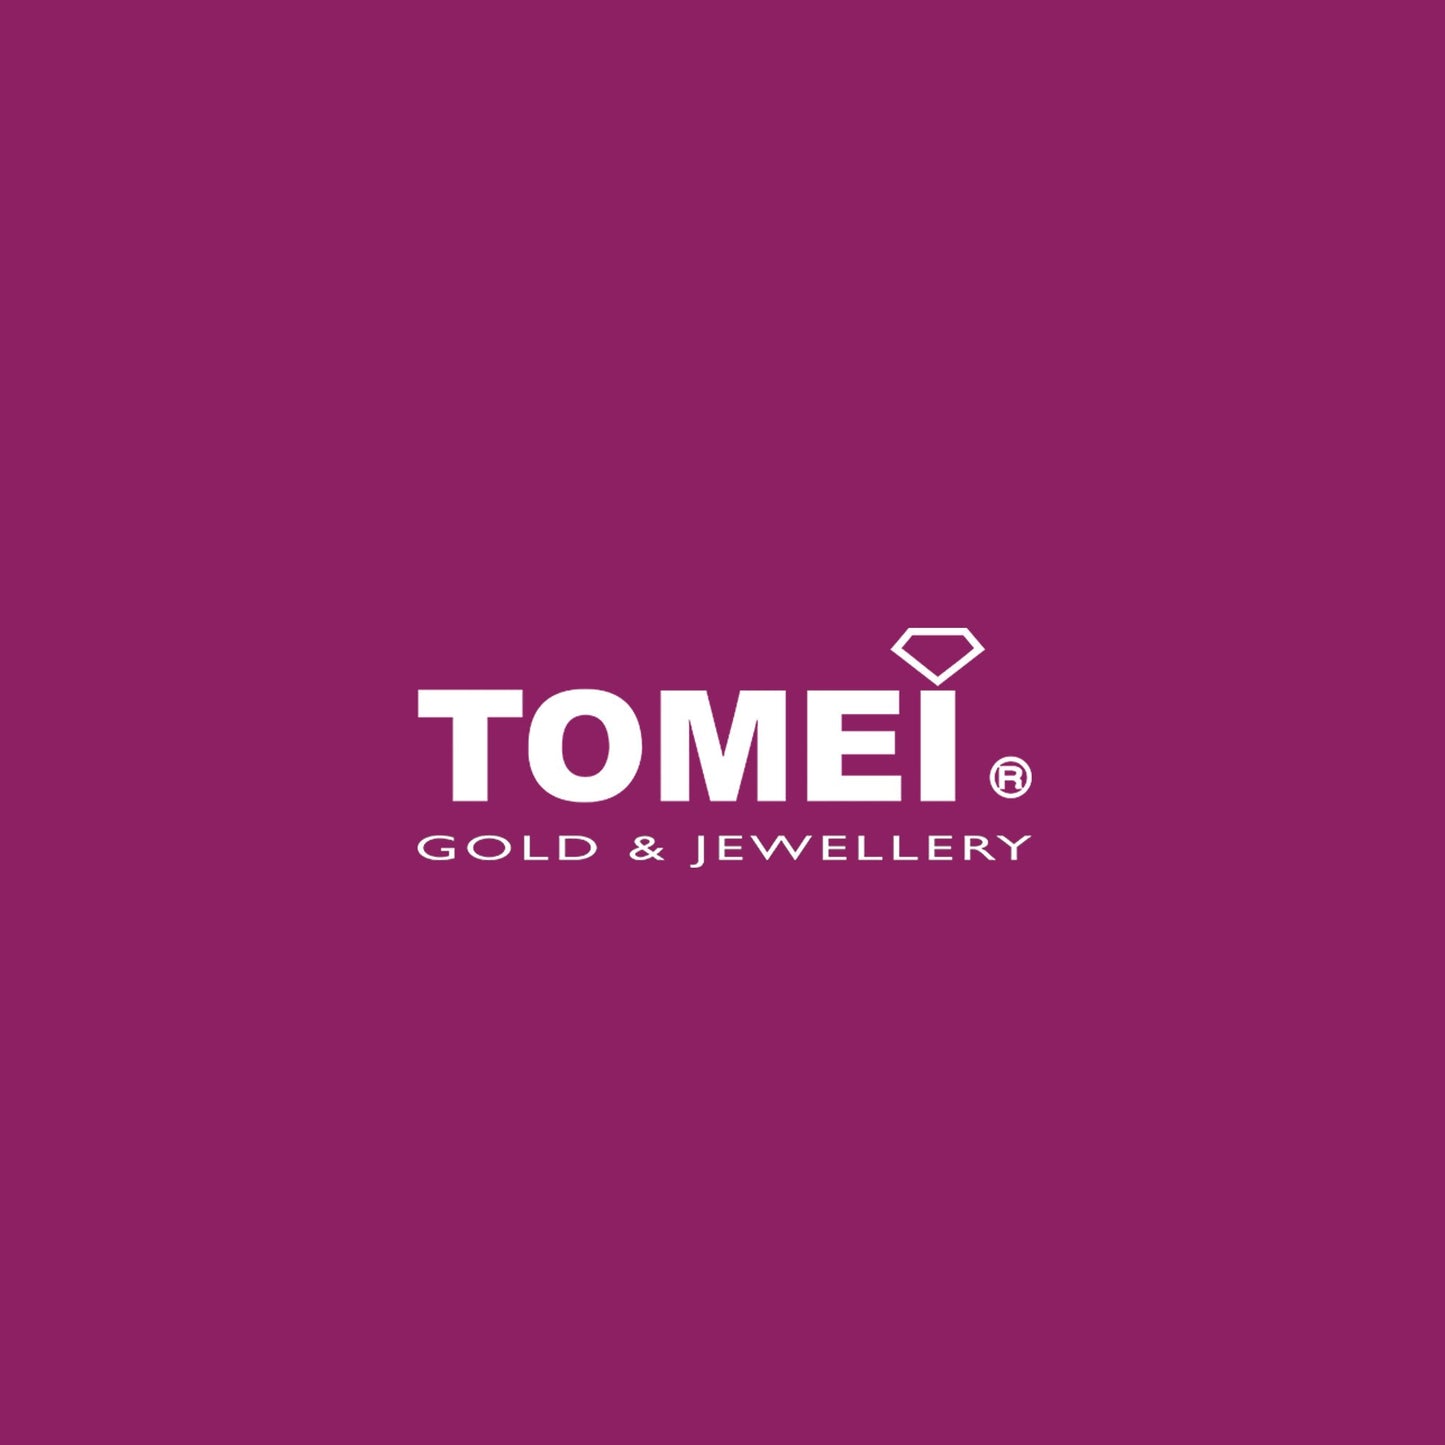 TOMEI Diamond Shaped Charm, Yellow Gold 916